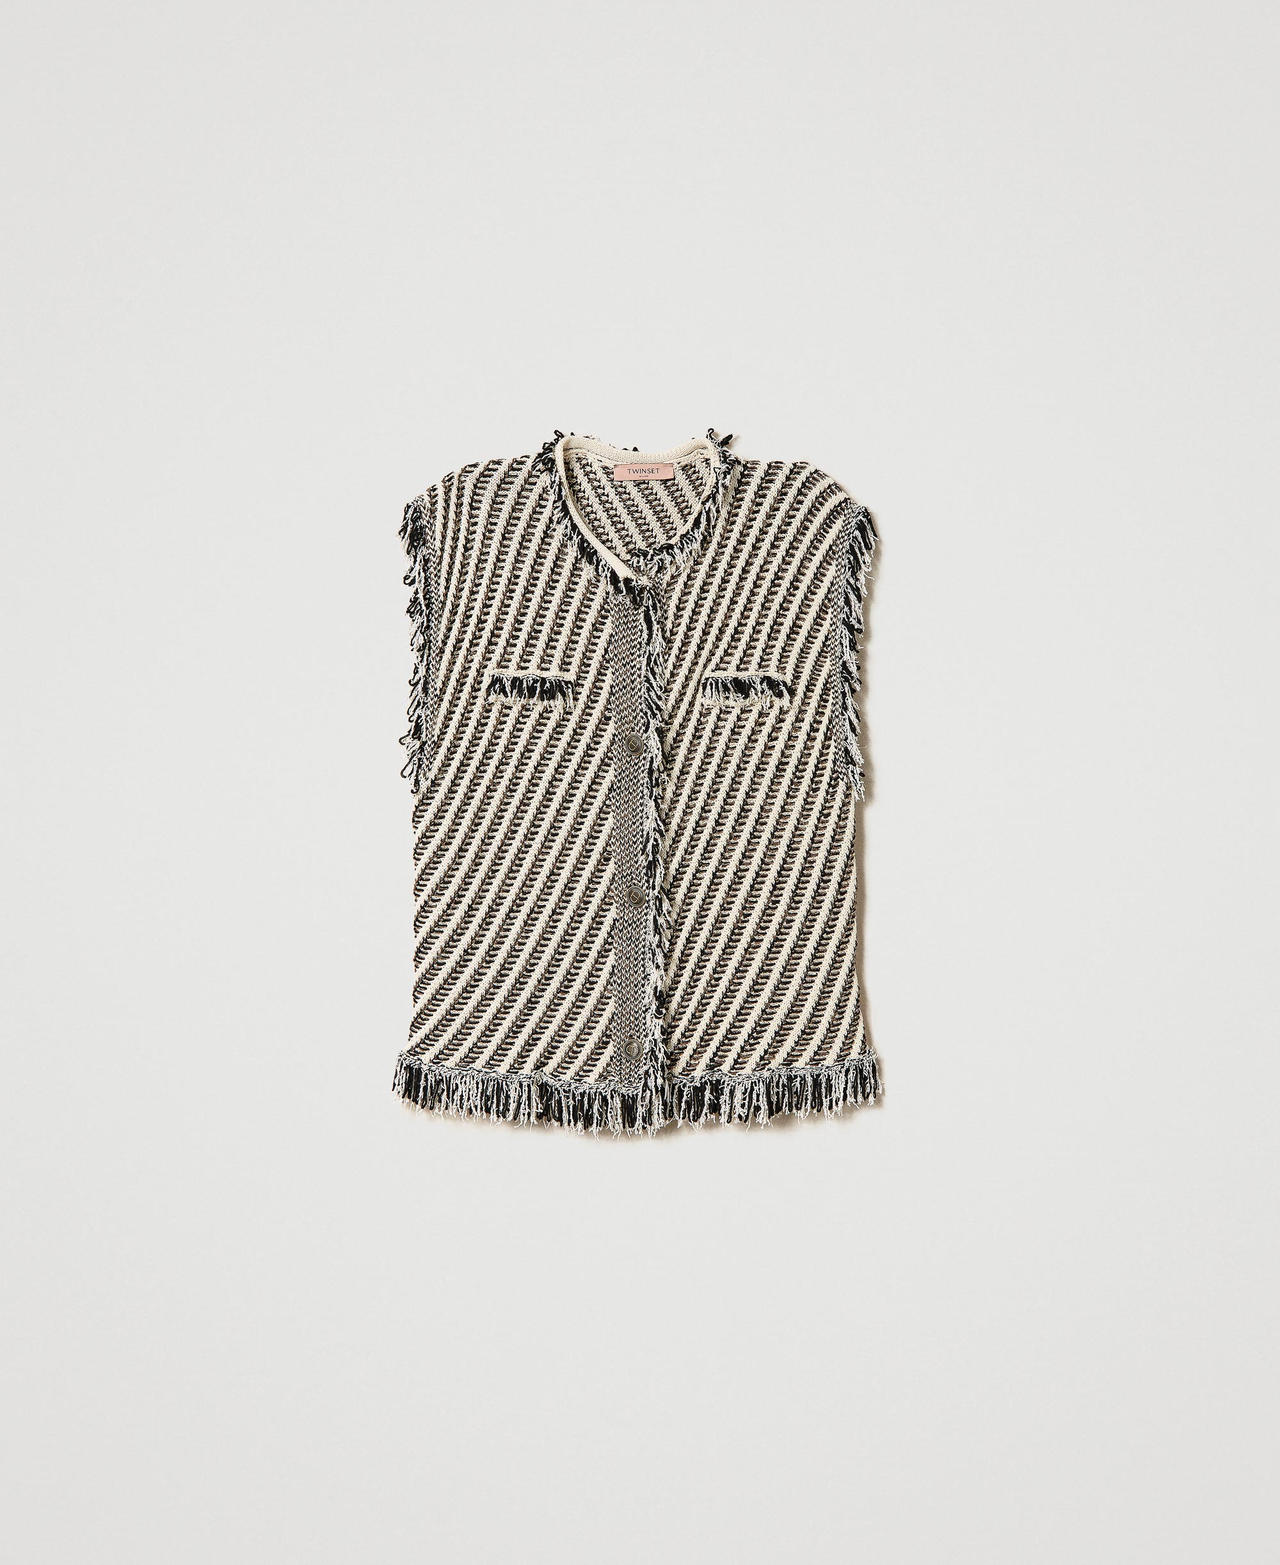 Jacquard knit sleeveless top with fringes Snow / Black / Lurex Stripes Jacquard Woman 241TP3133-0S